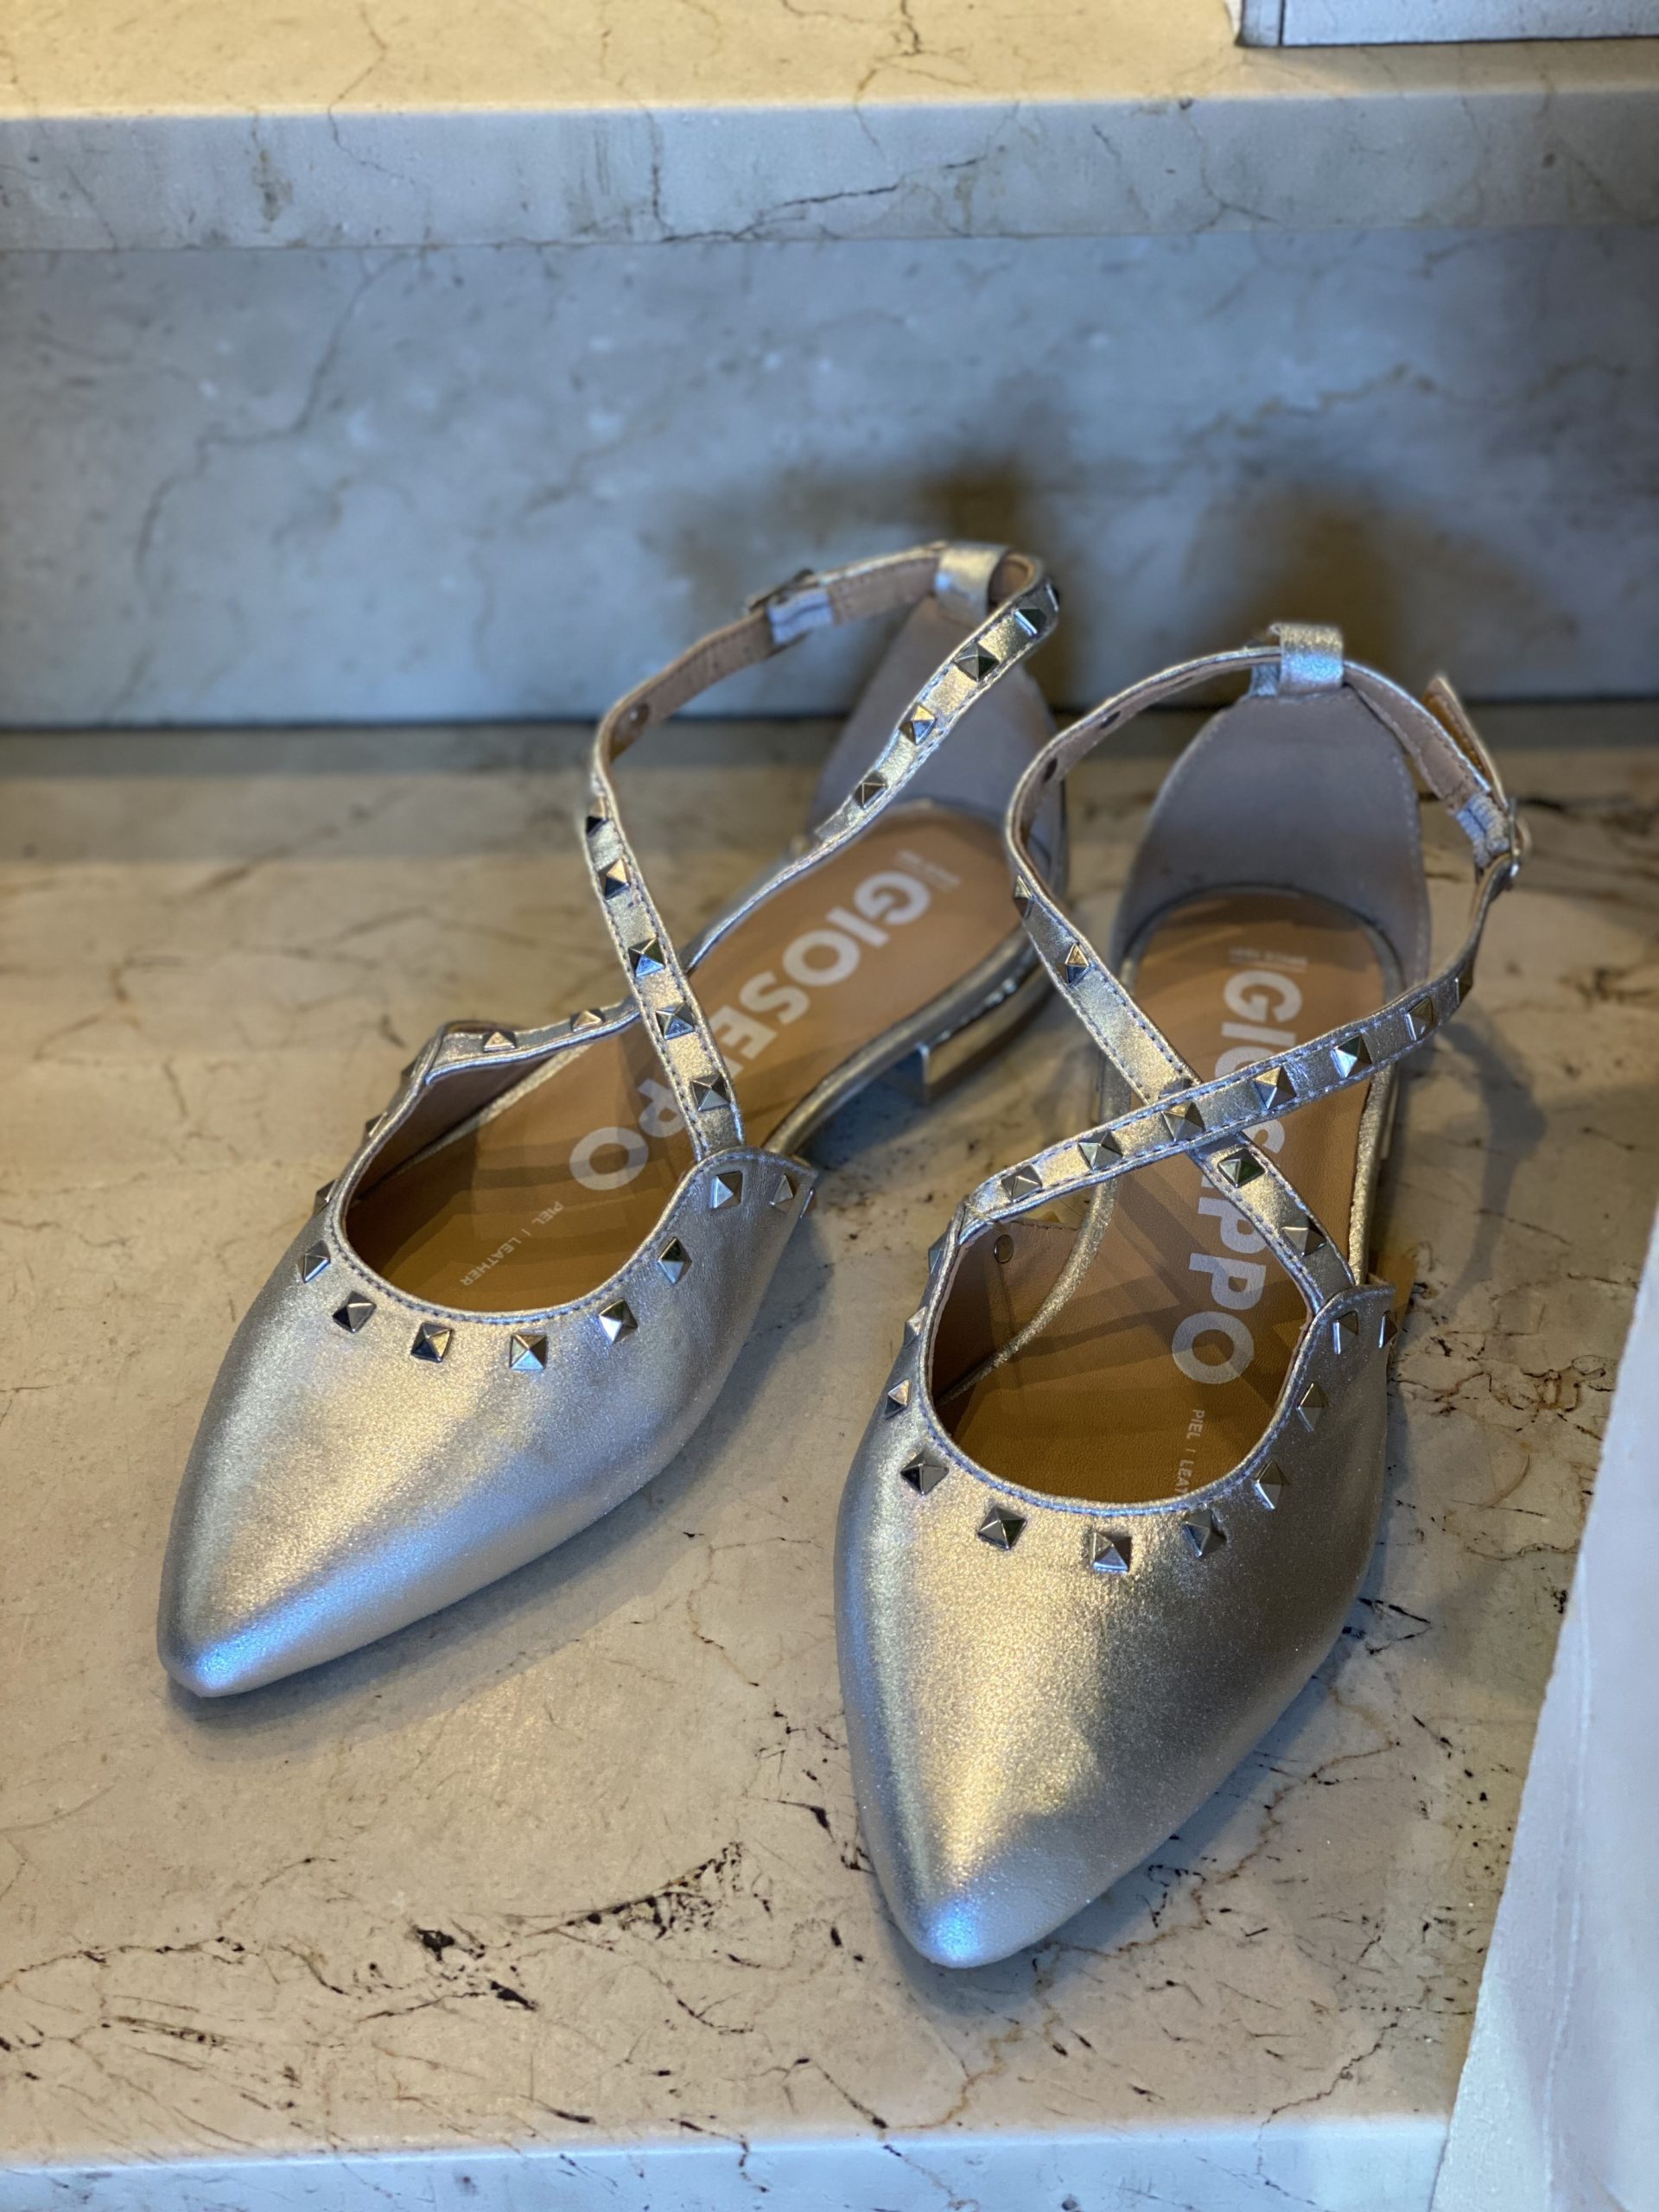 Zapato modelo Garcon de Gioseppo en piel metalizada color plata con tachuelas.